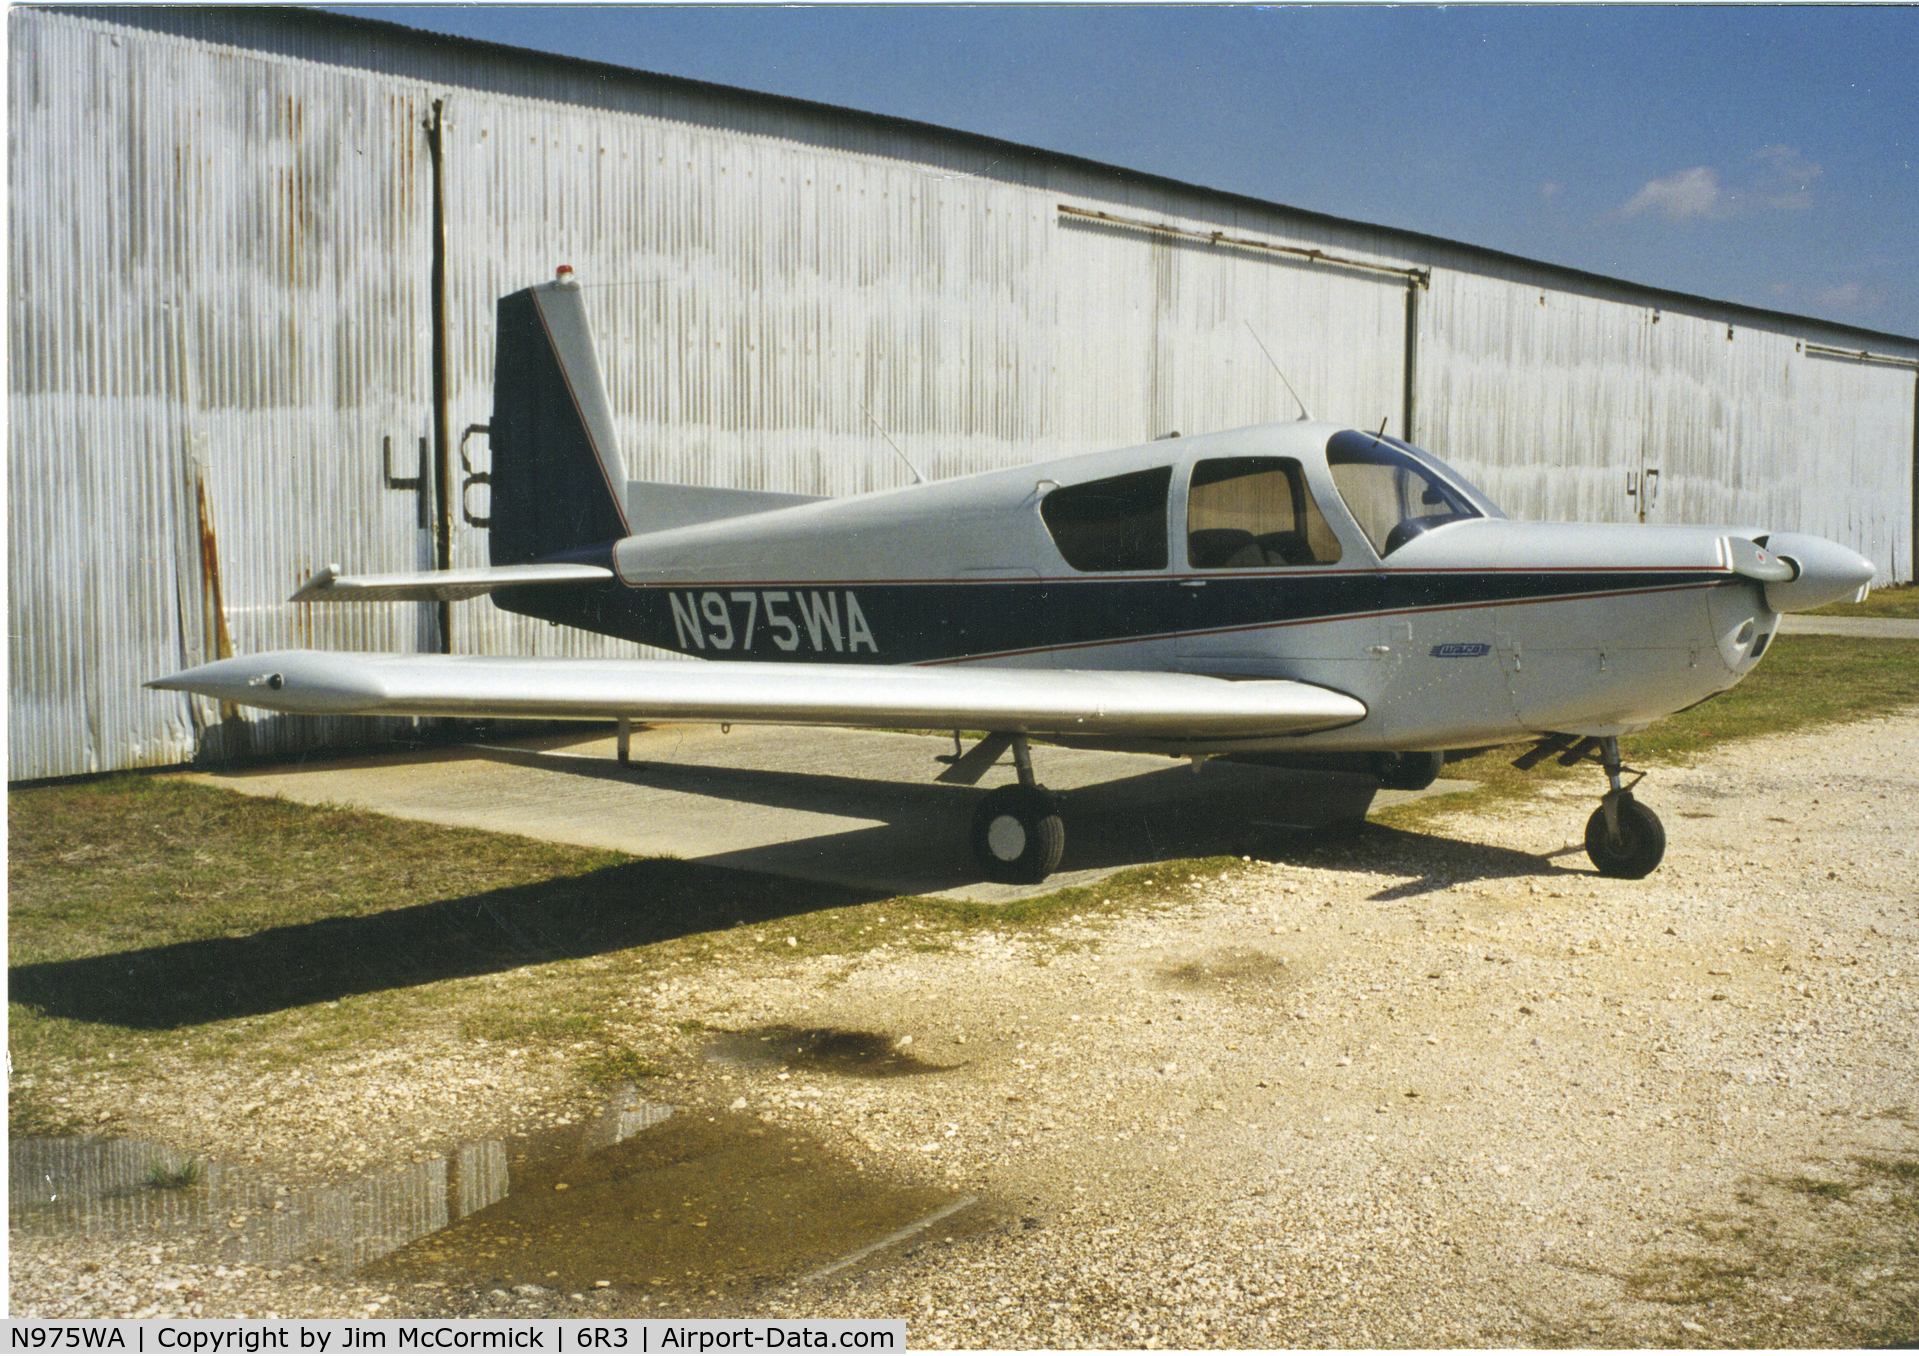 N975WA, 1968 SIAI-Marchetti S-205-22R C/N 4-125, Taken in 2000 at Cleveland, Tx (6R3).